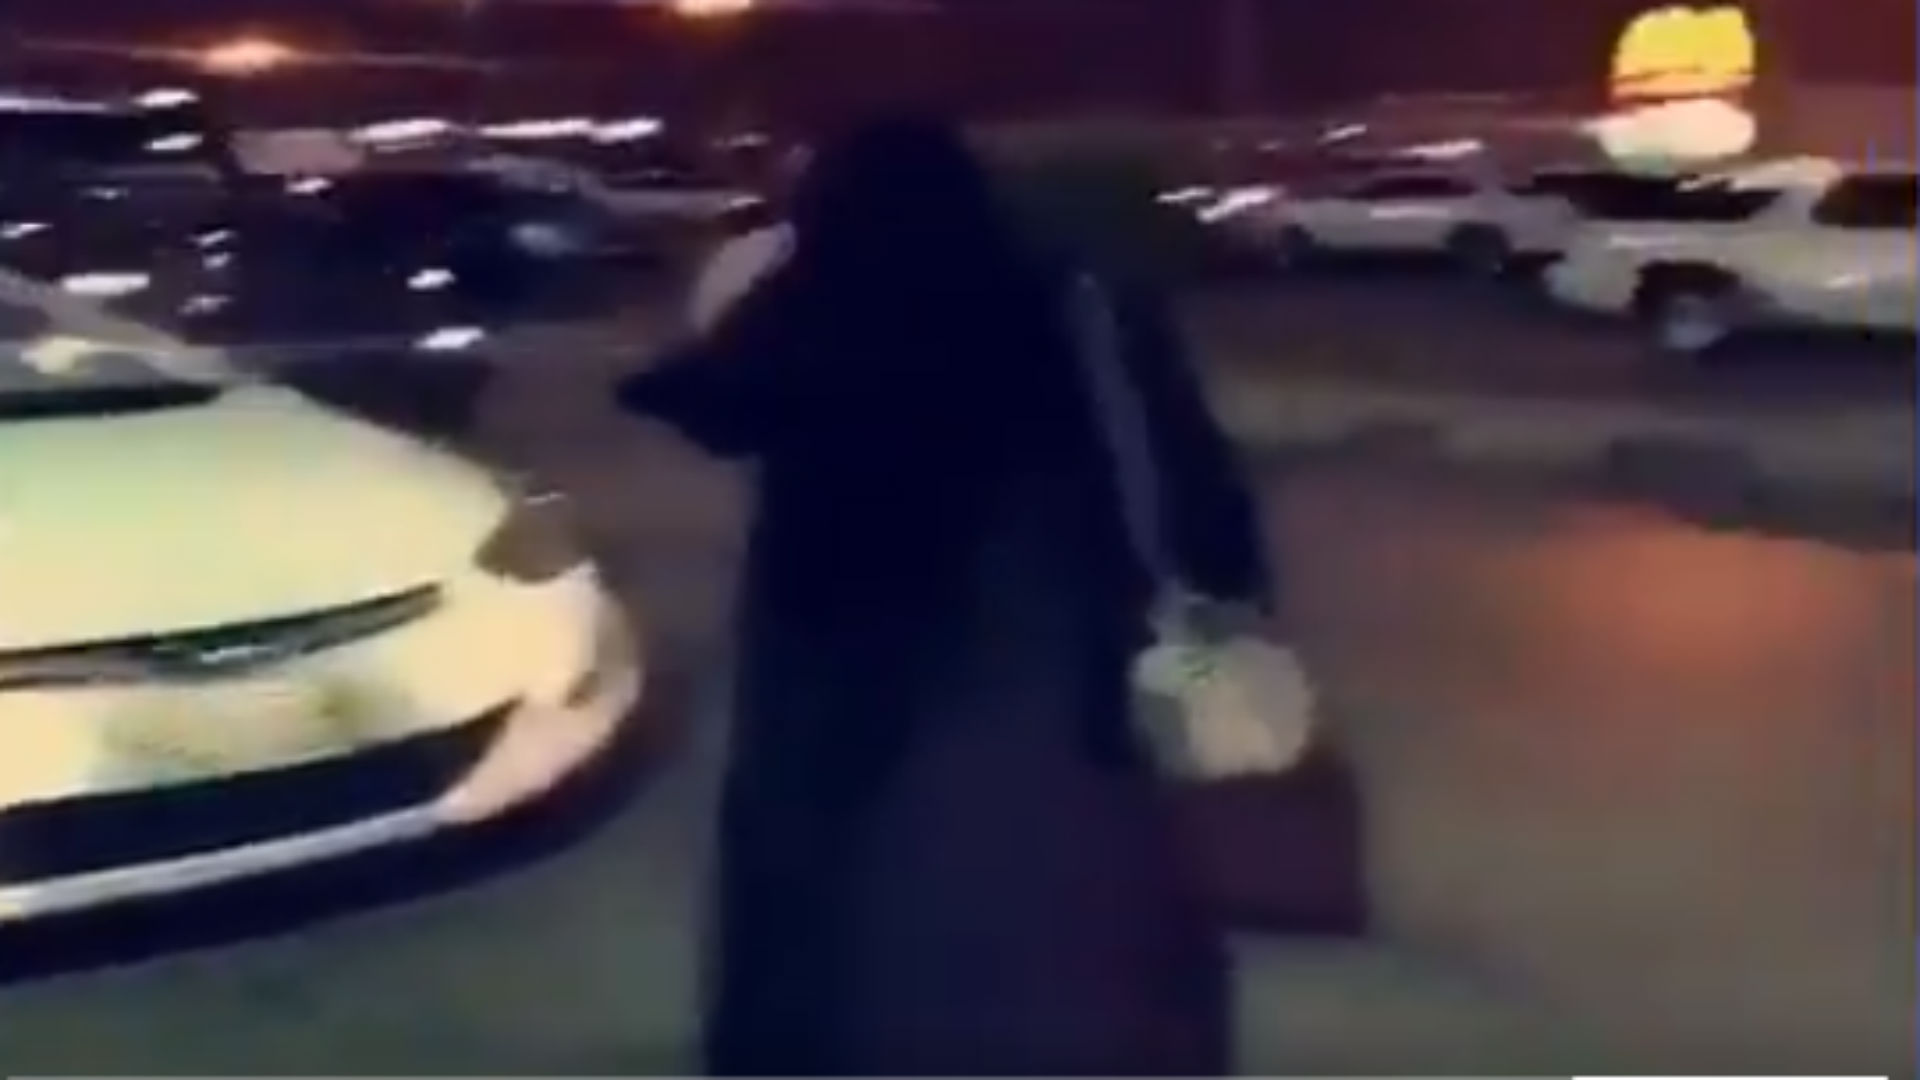 Is sex halal? Saudi Twitter debates viral pickup video pic